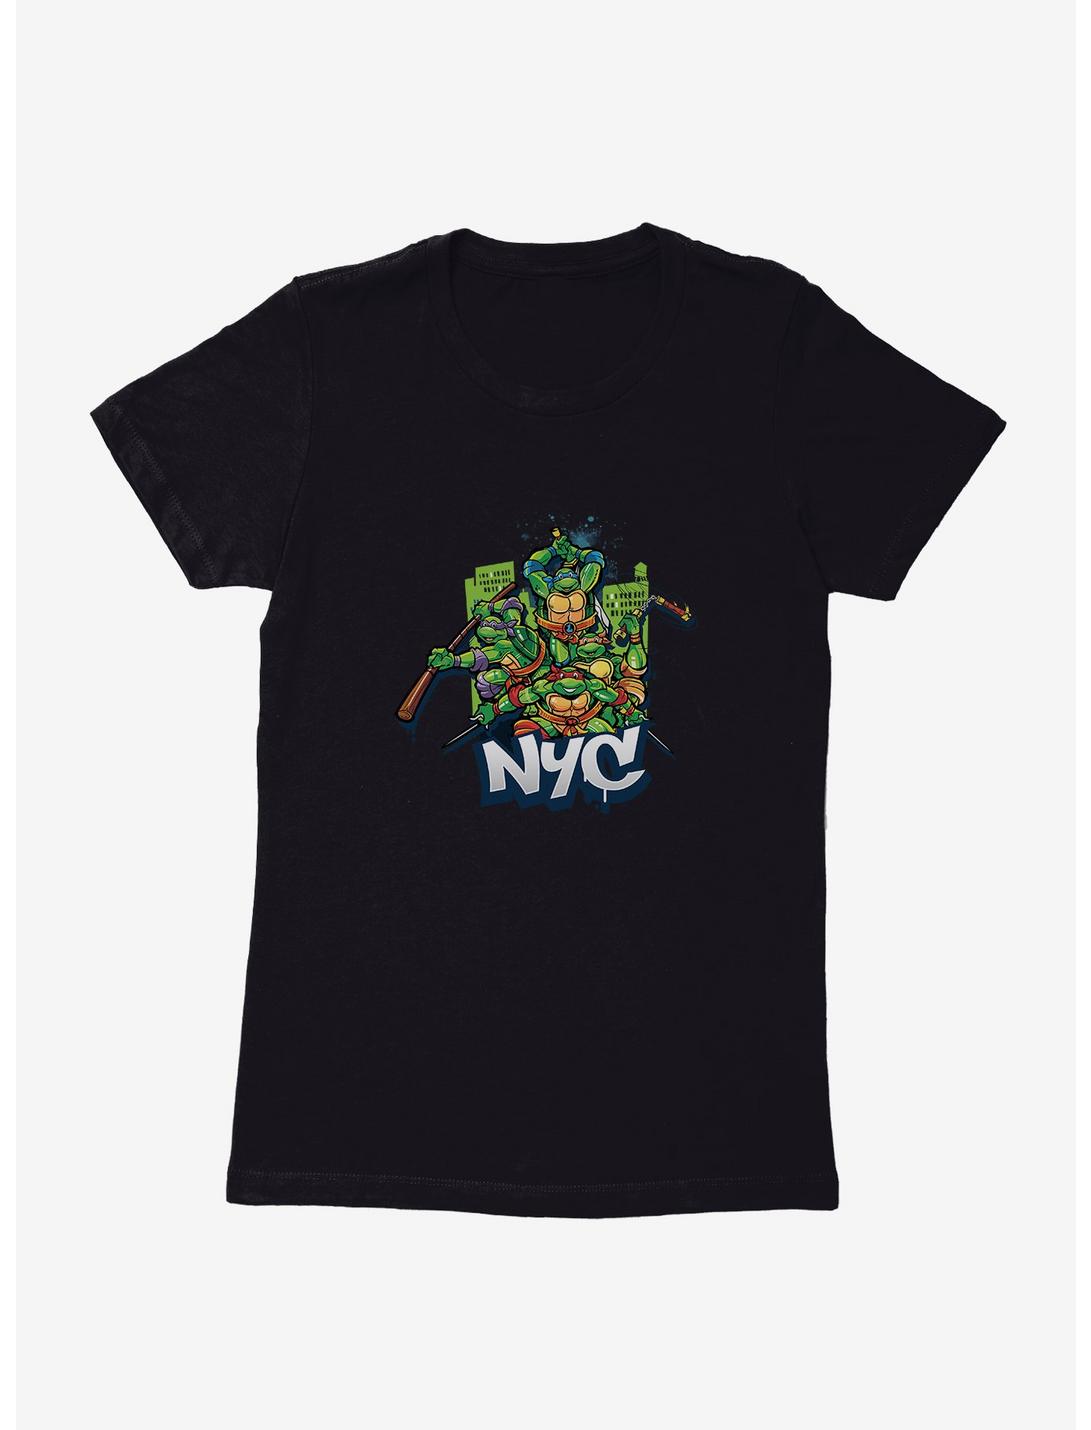 Teenage Mutant Ninja Turtles NYC Group Battle Pose Womens T-Shirt, BLACK, hi-res